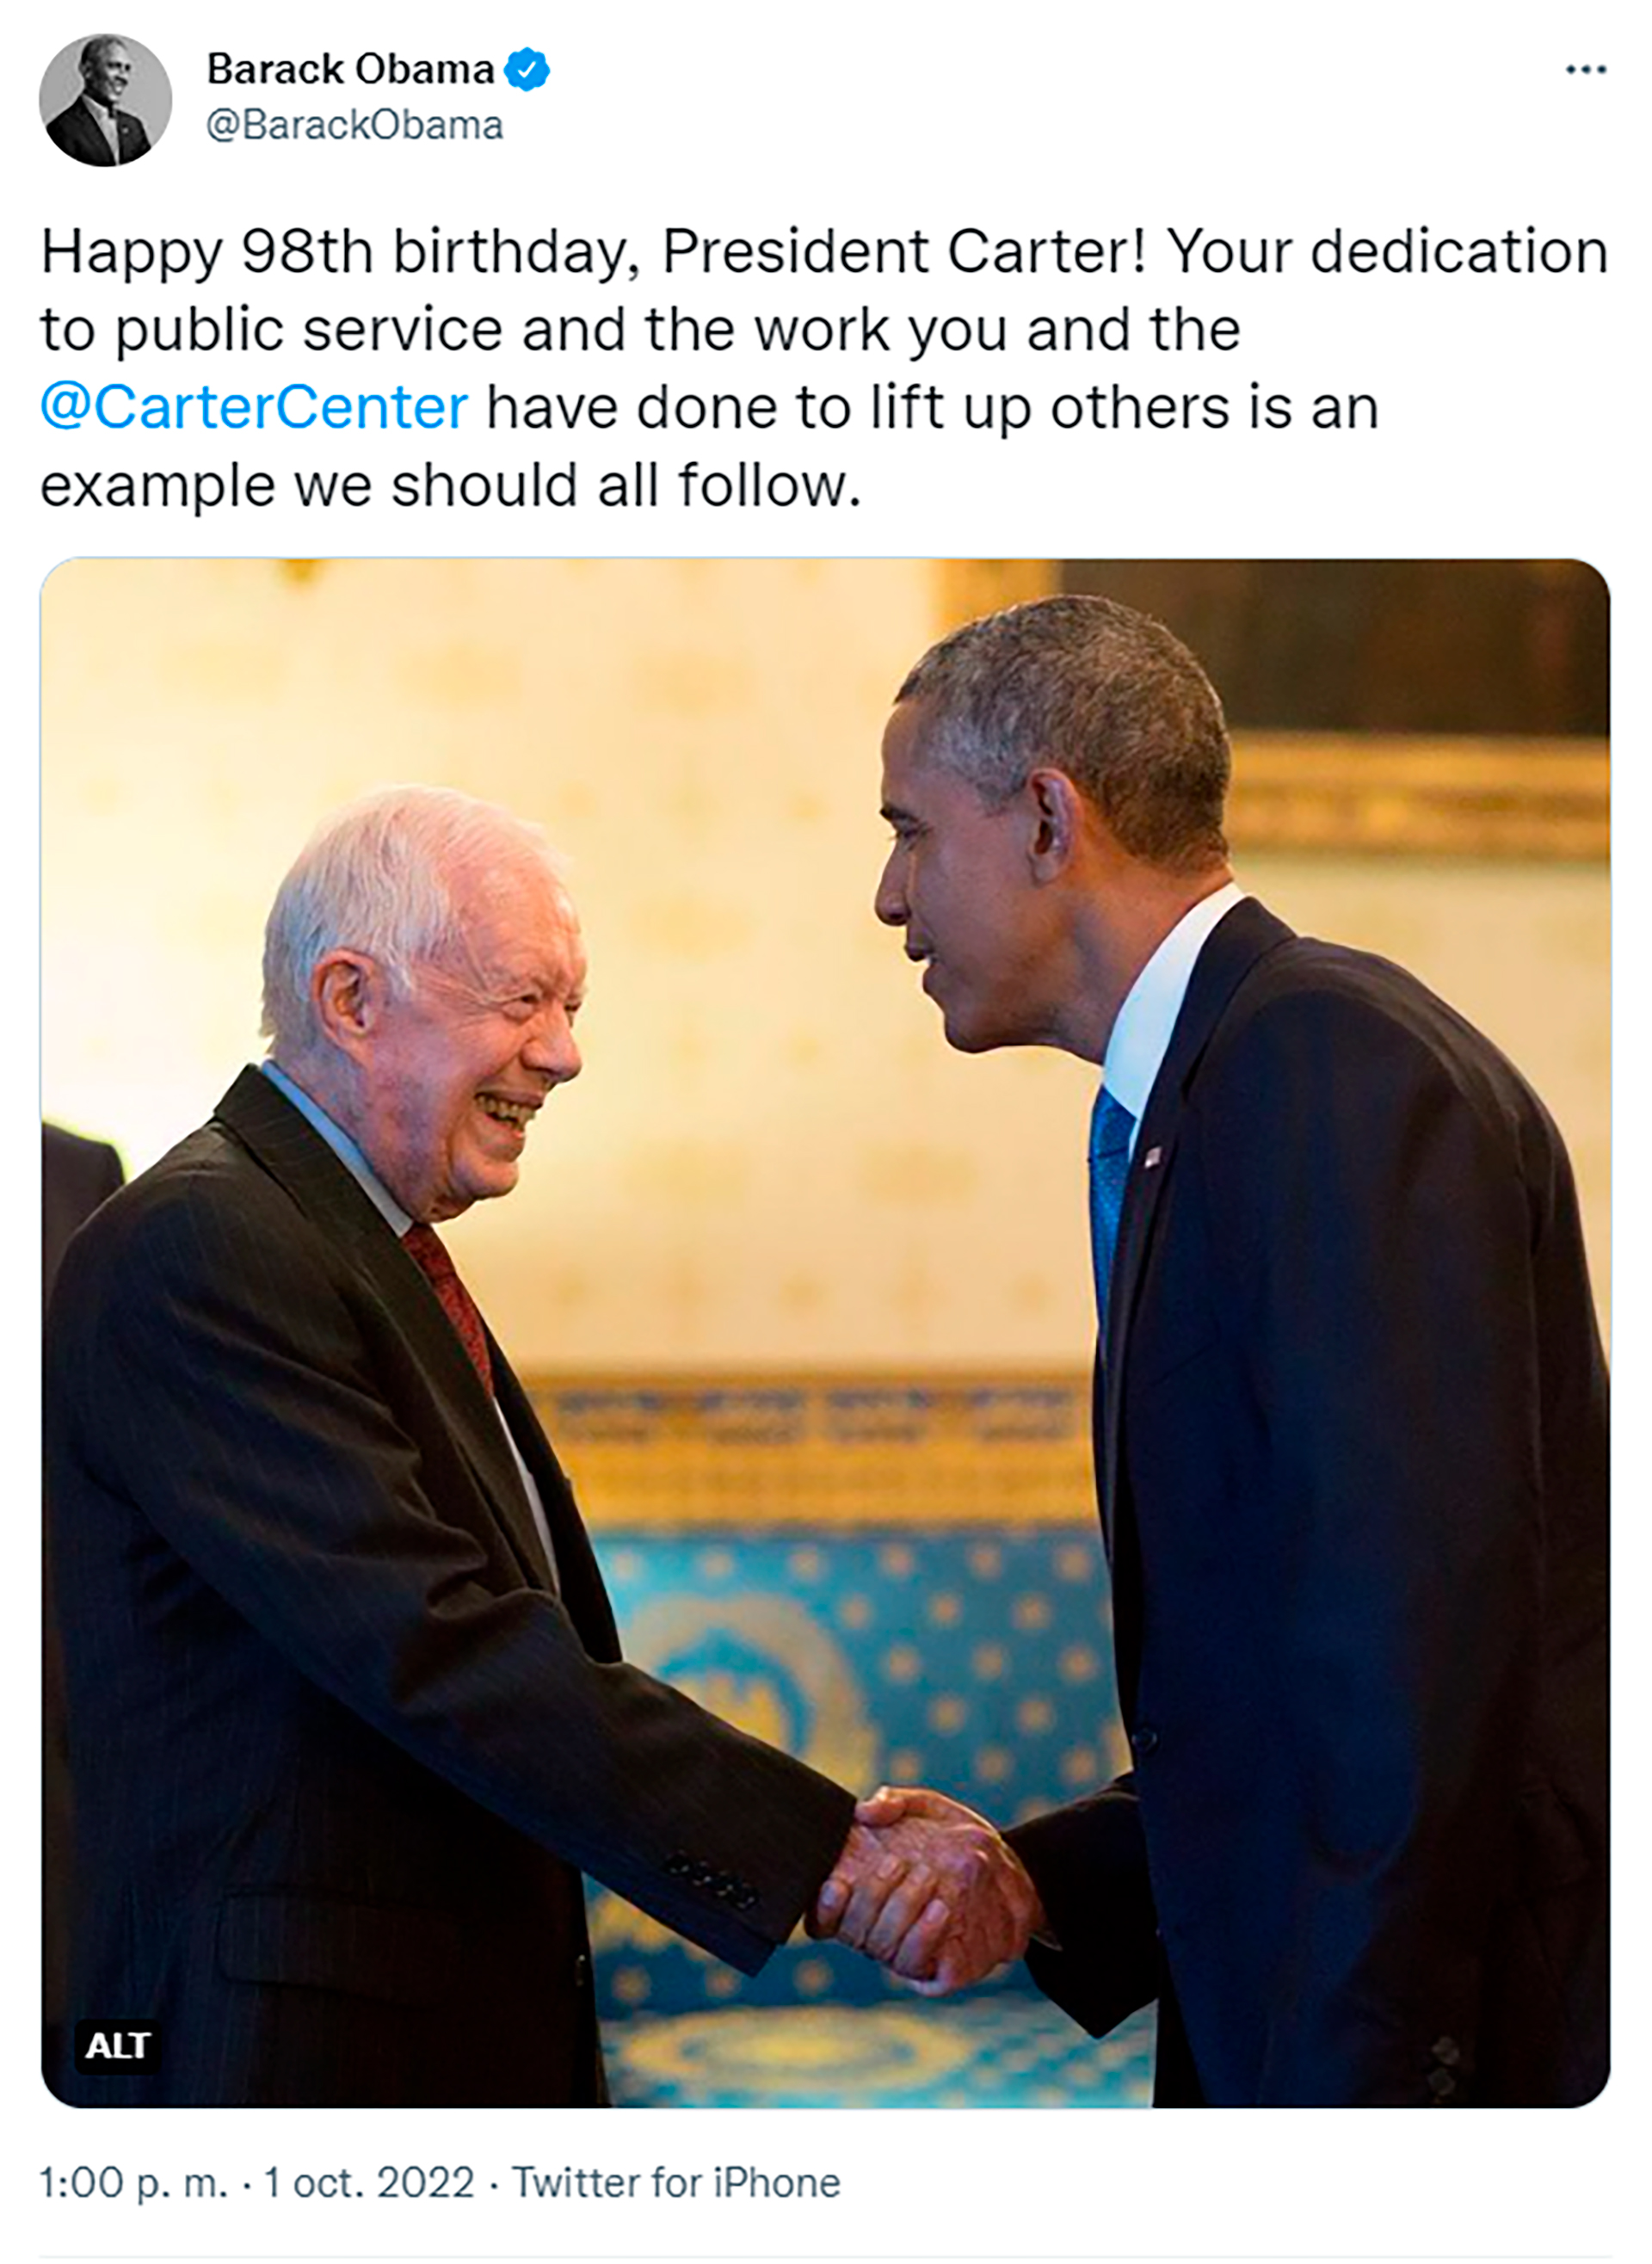 El saludo de Obama a Carter en Twitter